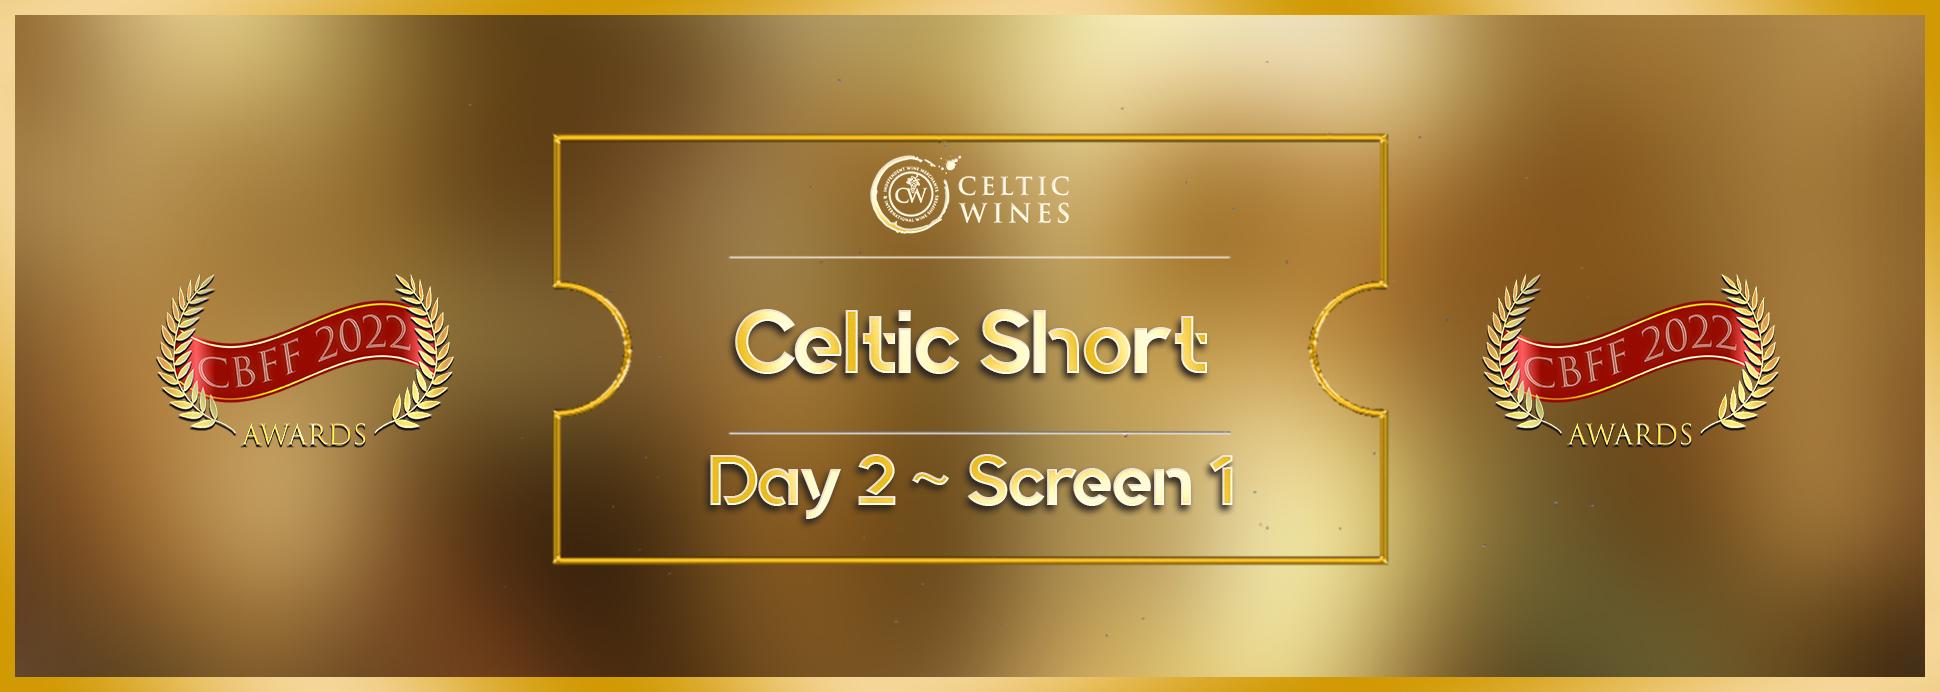 Day 2 Screen 1 Celtic Short